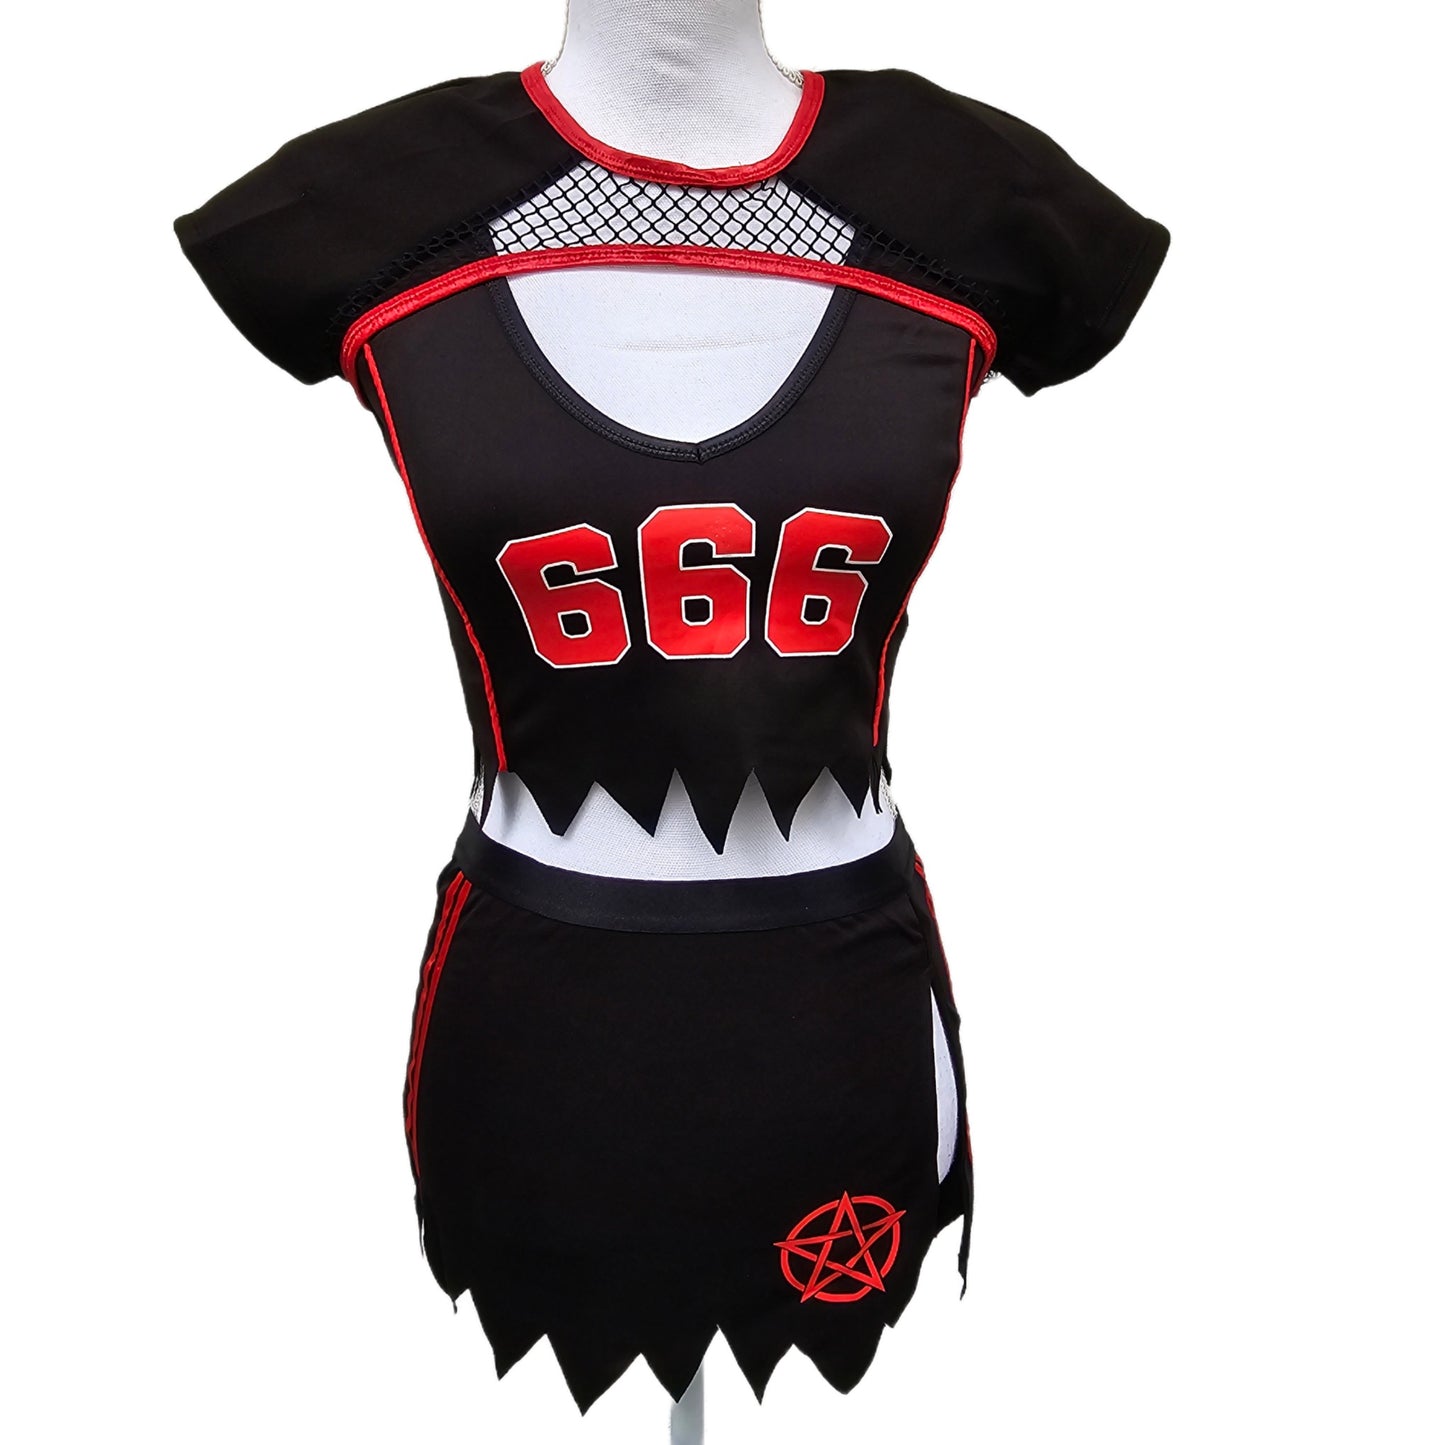 Football Costume Set | Go Devils | Red & Black Pentagram & 666 Graphic - Trickz N Treatz - Costumes